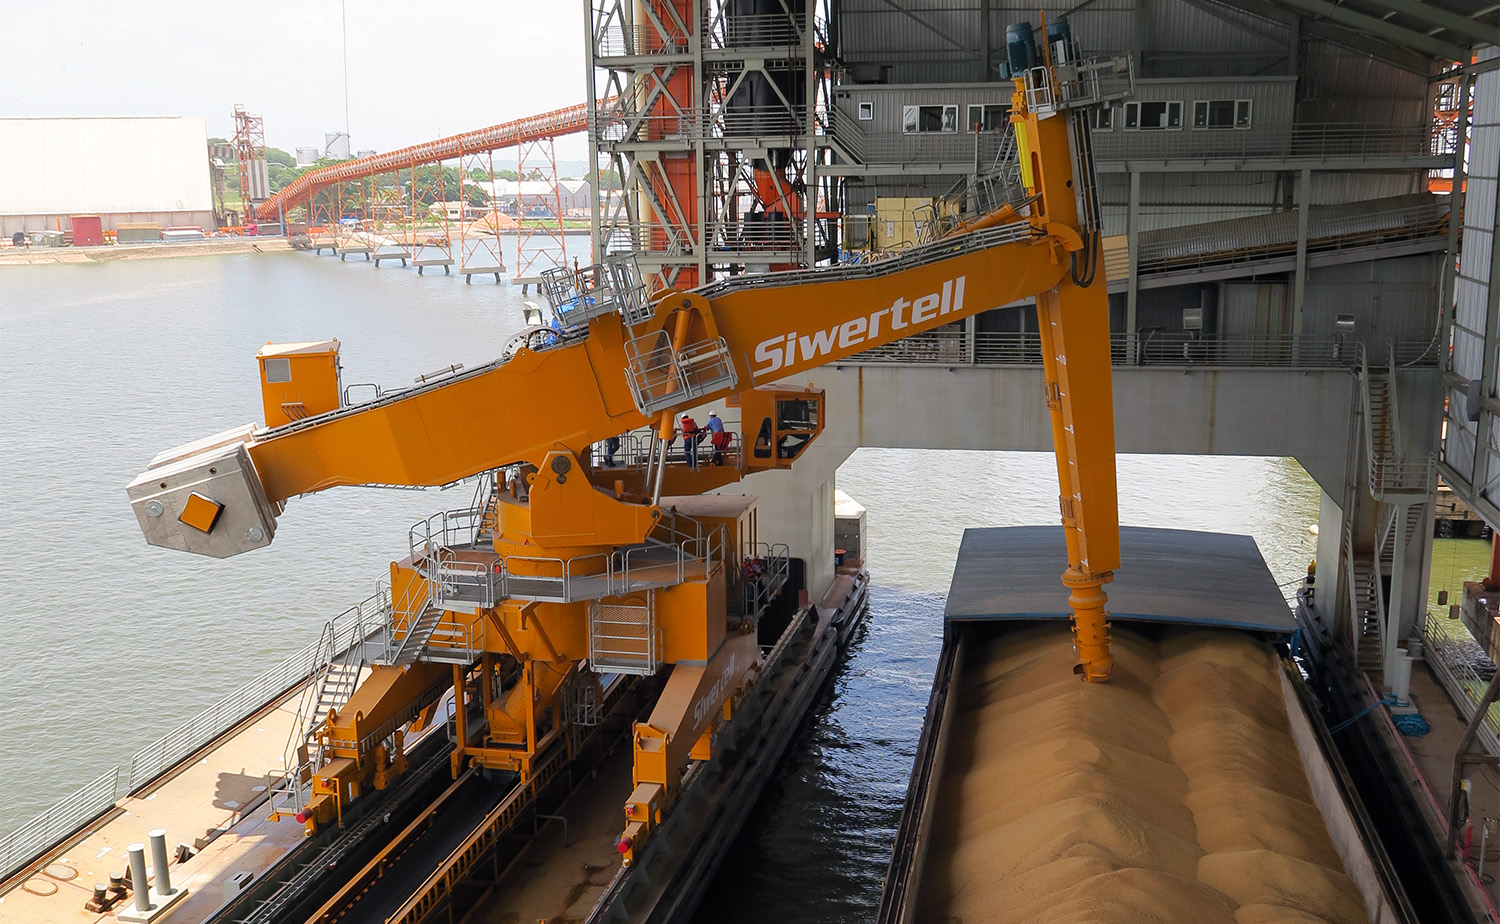 Siwertell ship unloader unloading grain from barges